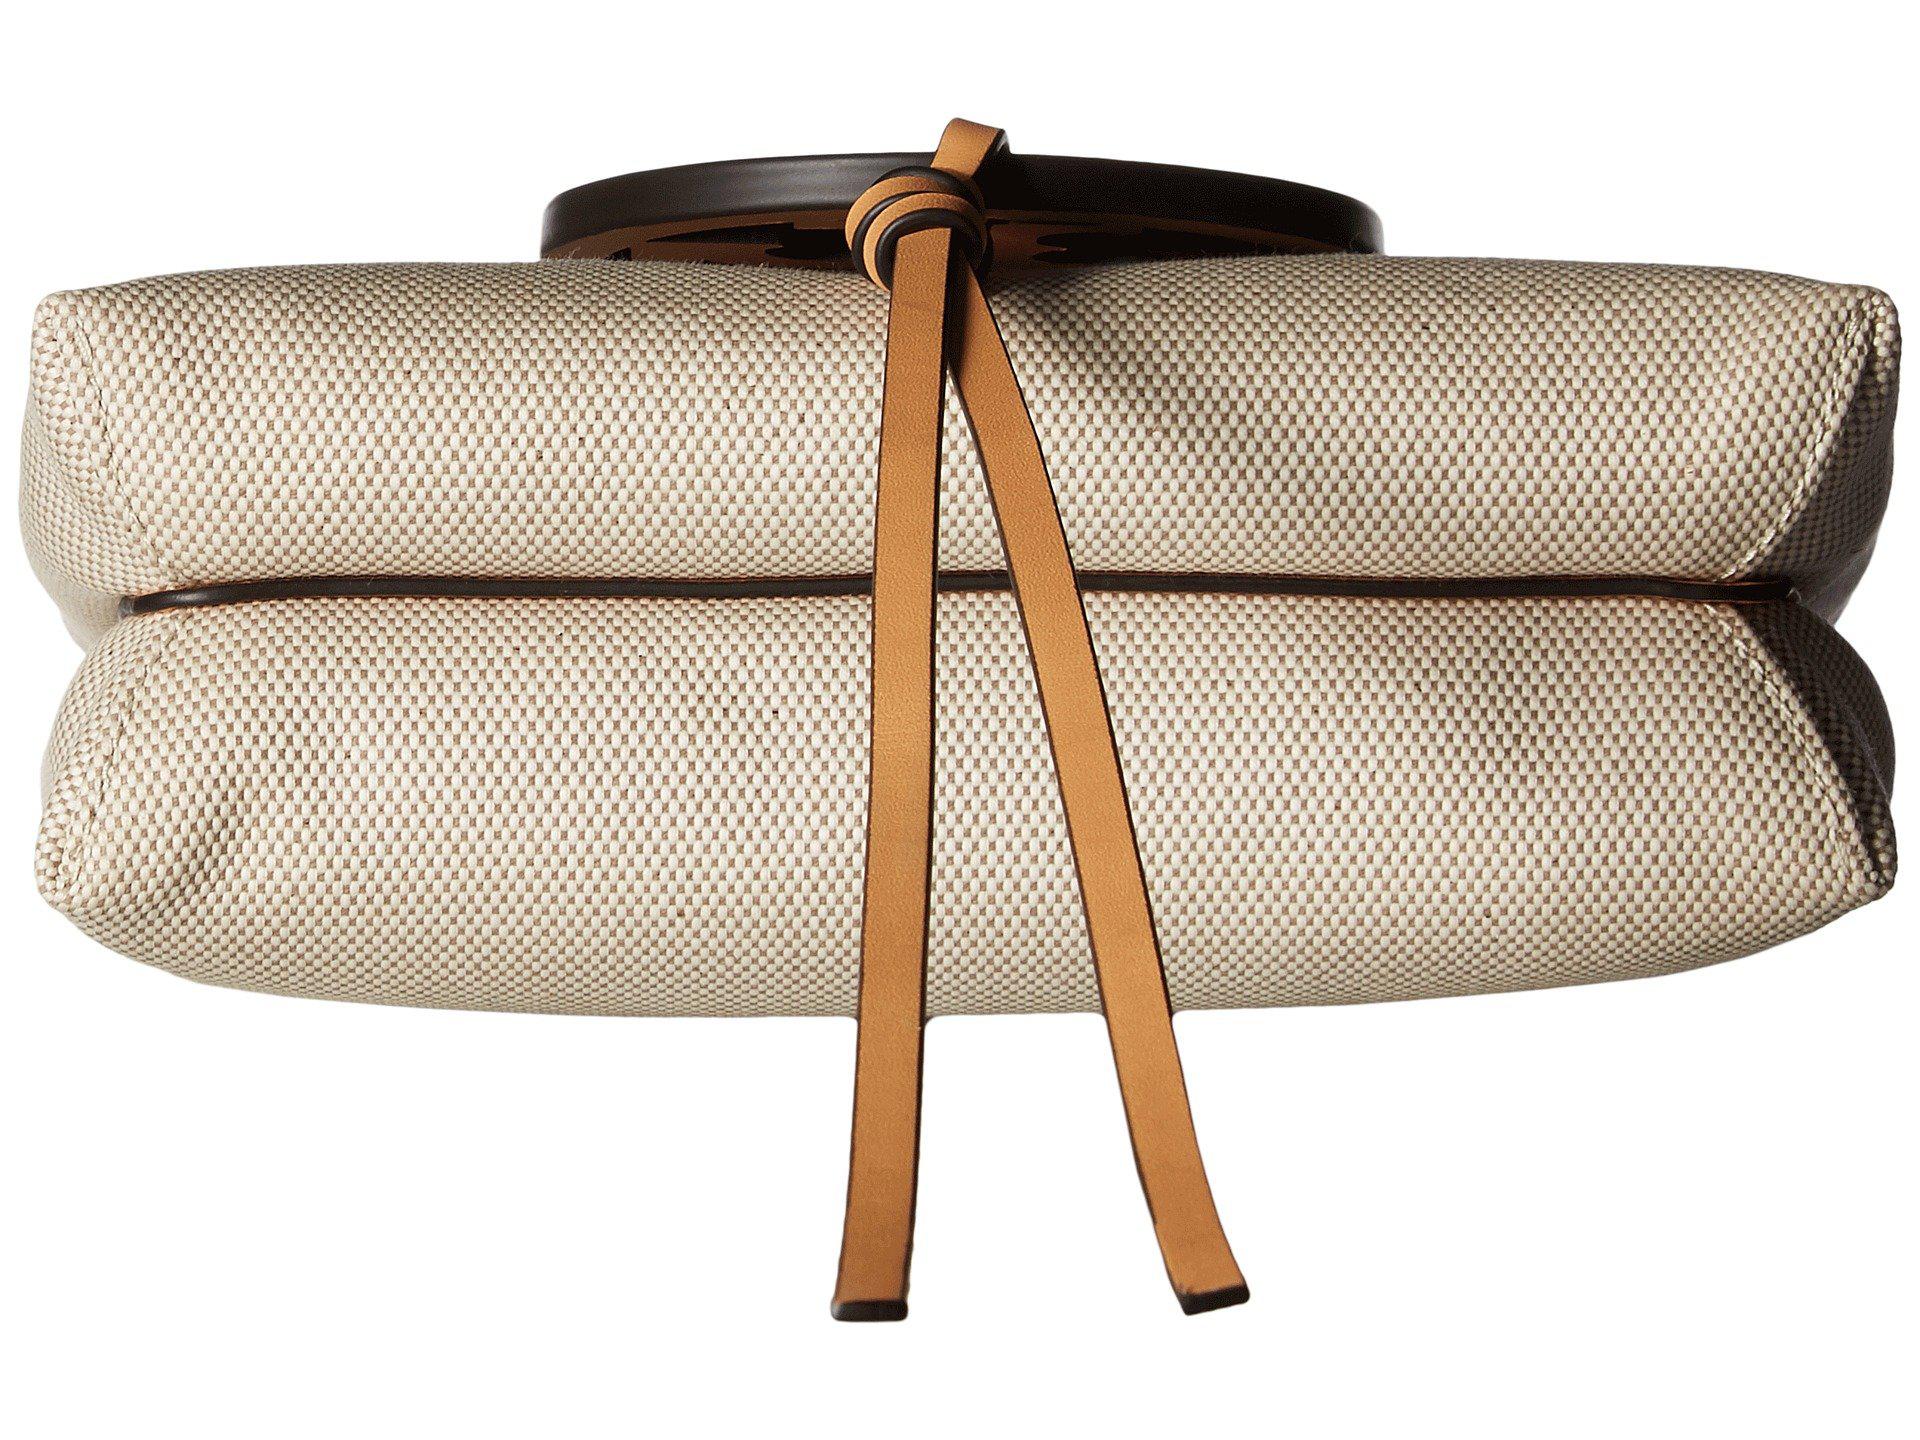 Tory Burch Miller Crossbody Canvas (natural/vachetta) Handbags in Natural - Lyst